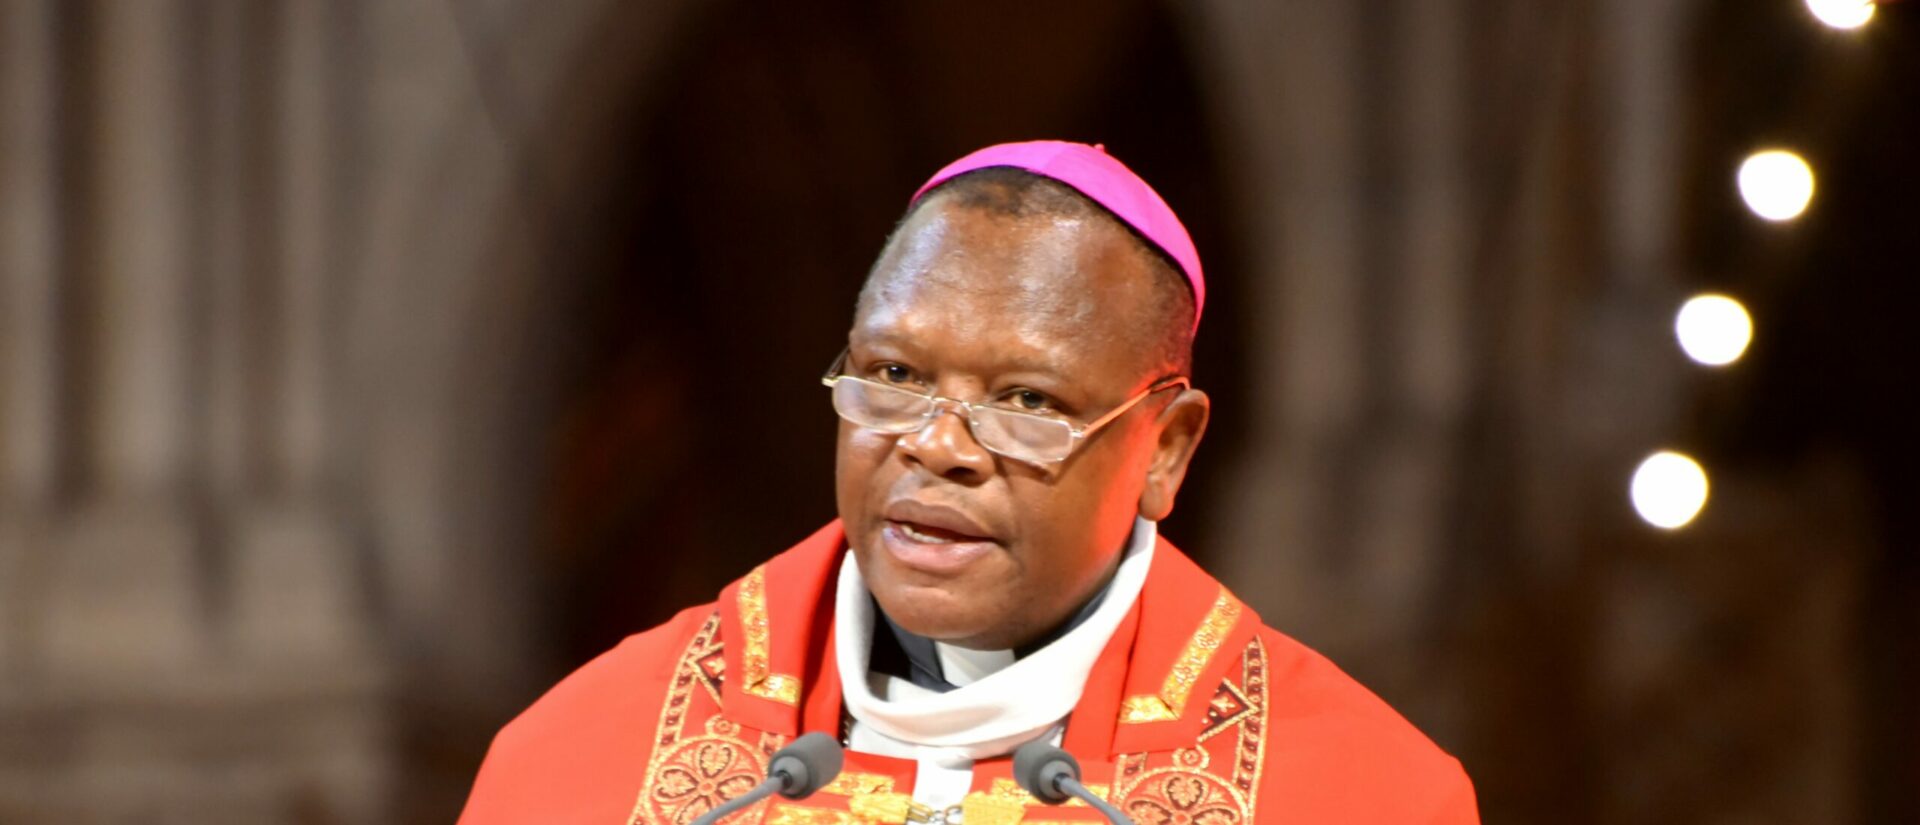 Le cardinal Fridolin Ambongo, archevêque de Kinshasa | © François-Régis Salefran/Wikimedia/CC BY-SA 4.0